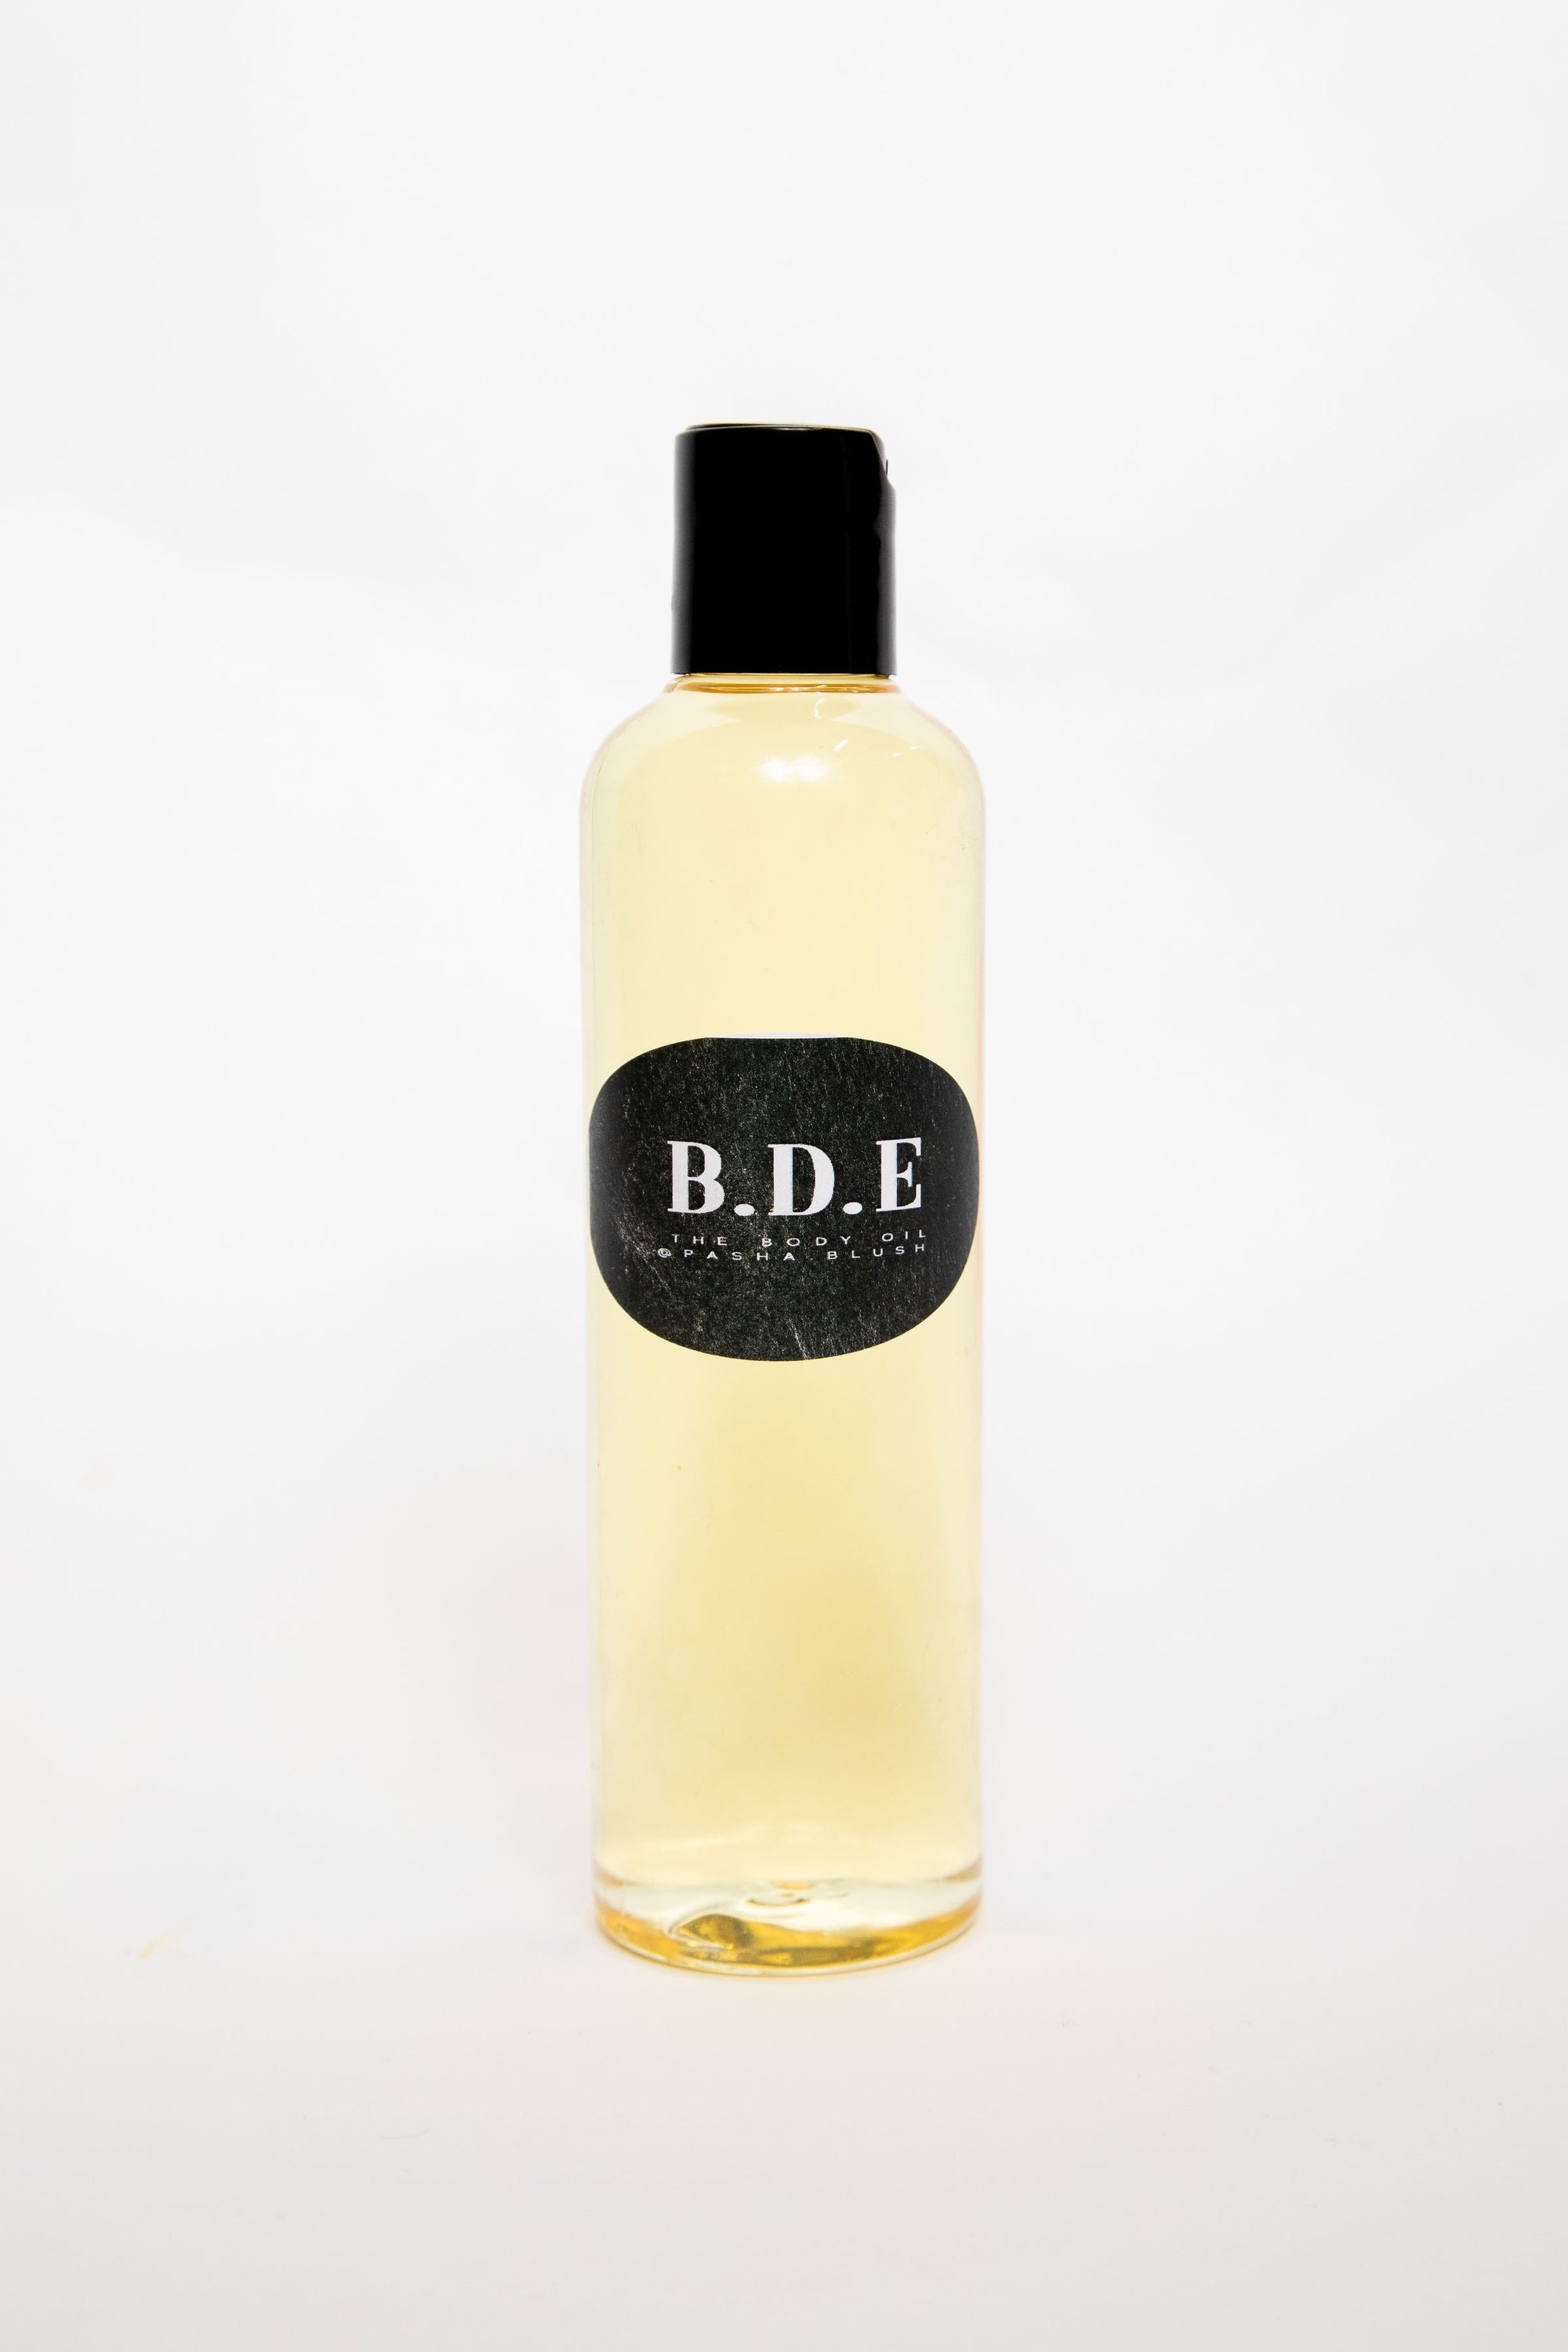 BDE Body Oil